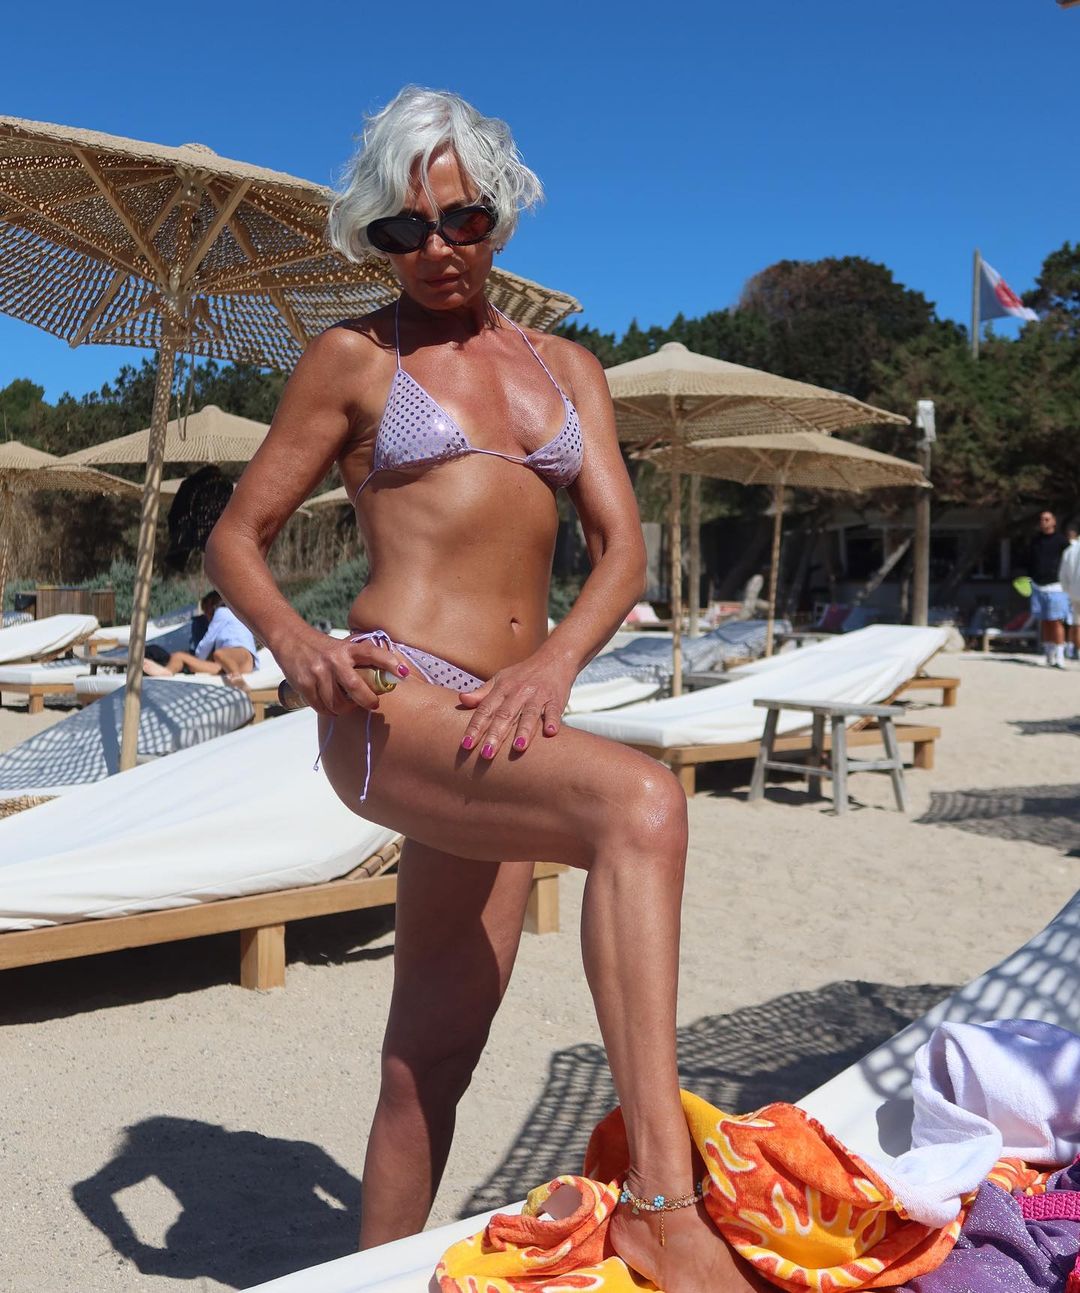 Grece Ghanem weaing sparkly bikini